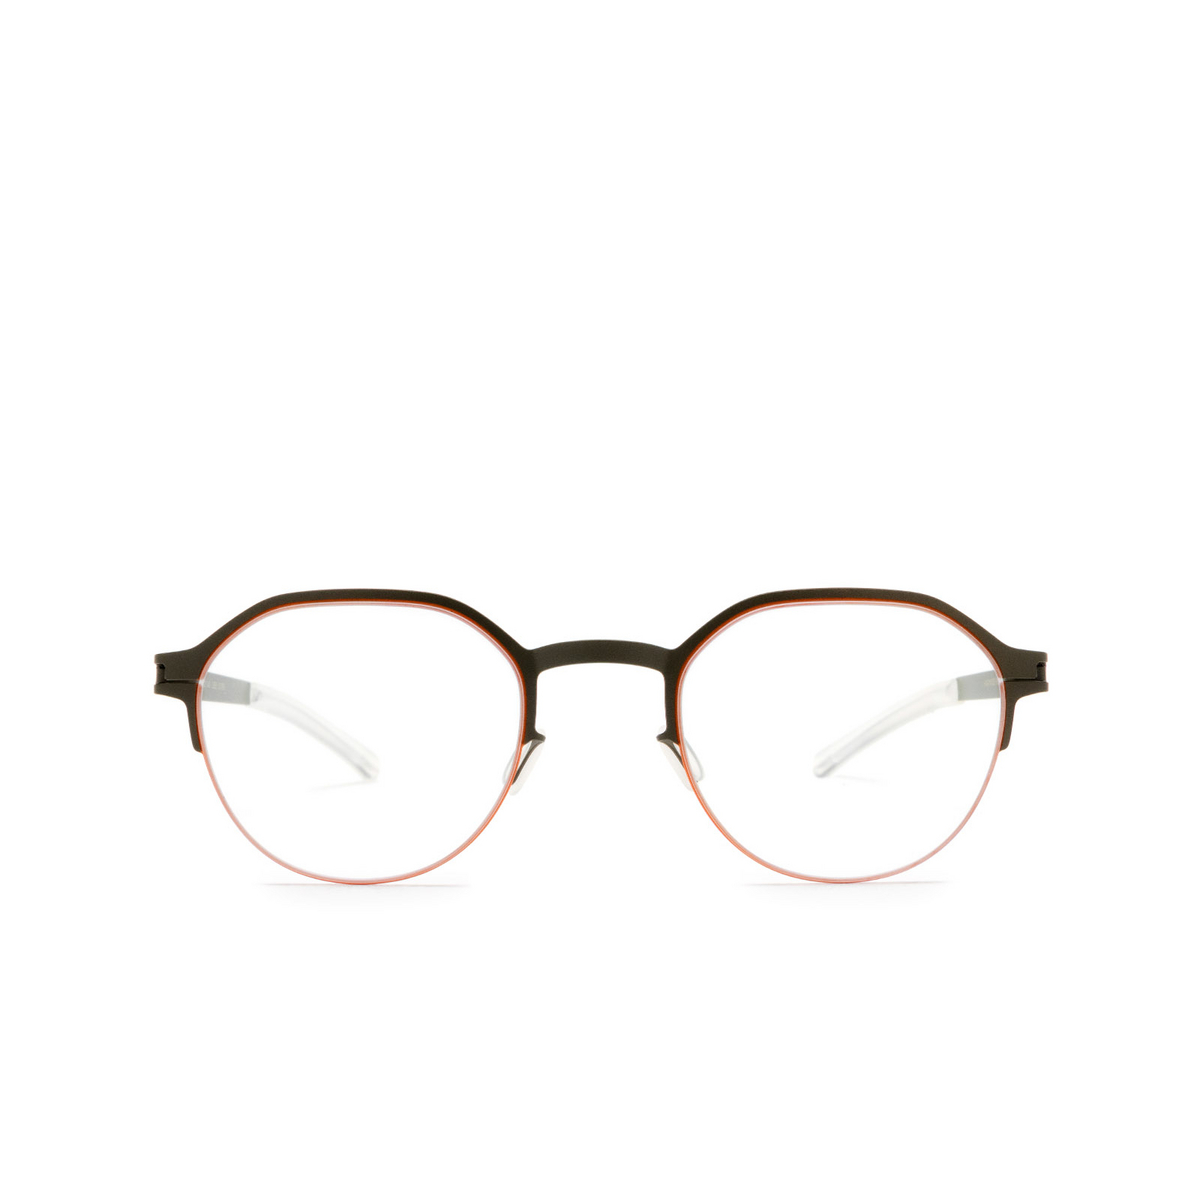 Mykita DORIAN Eyeglasses 625 Camougreen/Tangerine - front view